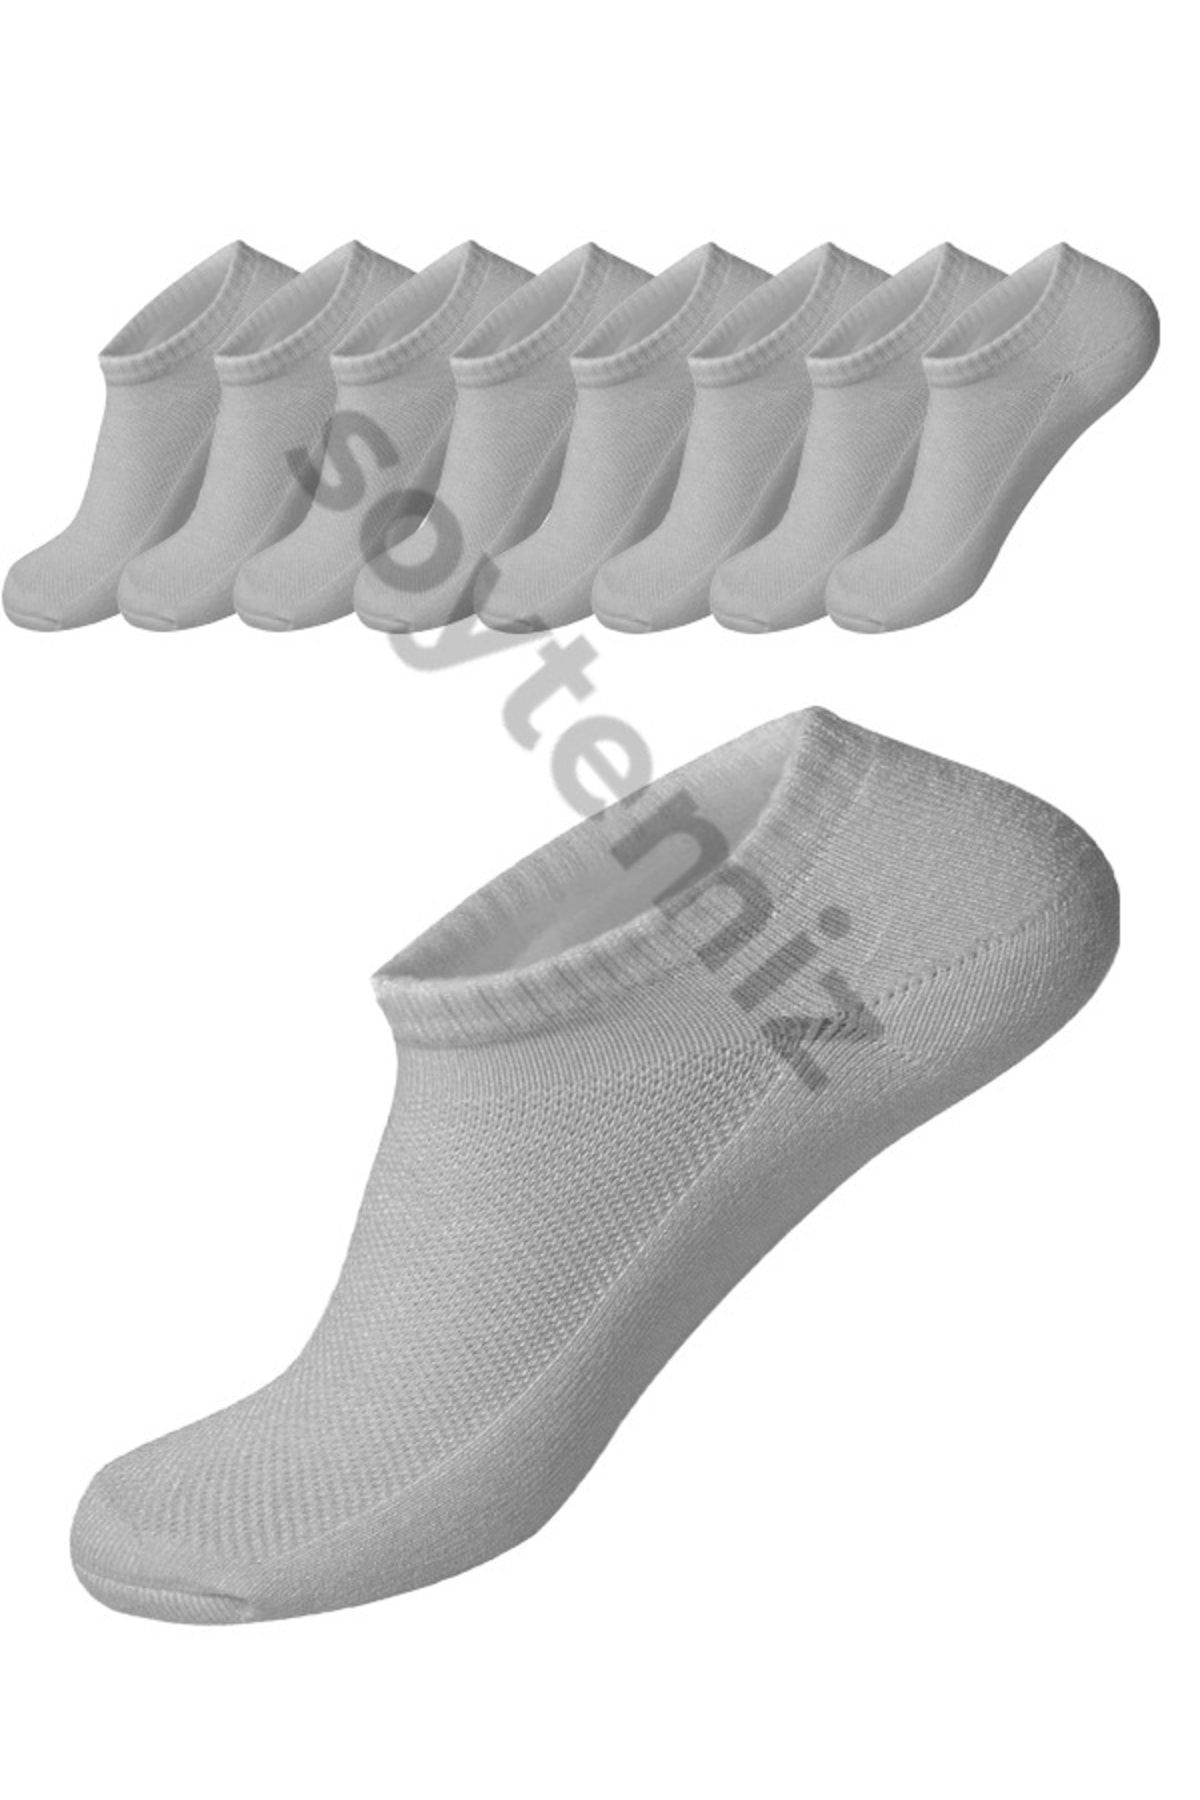 SOYTEMİZ Unisex Gri Cotton Sneakers Spor Çorap 8 Çift